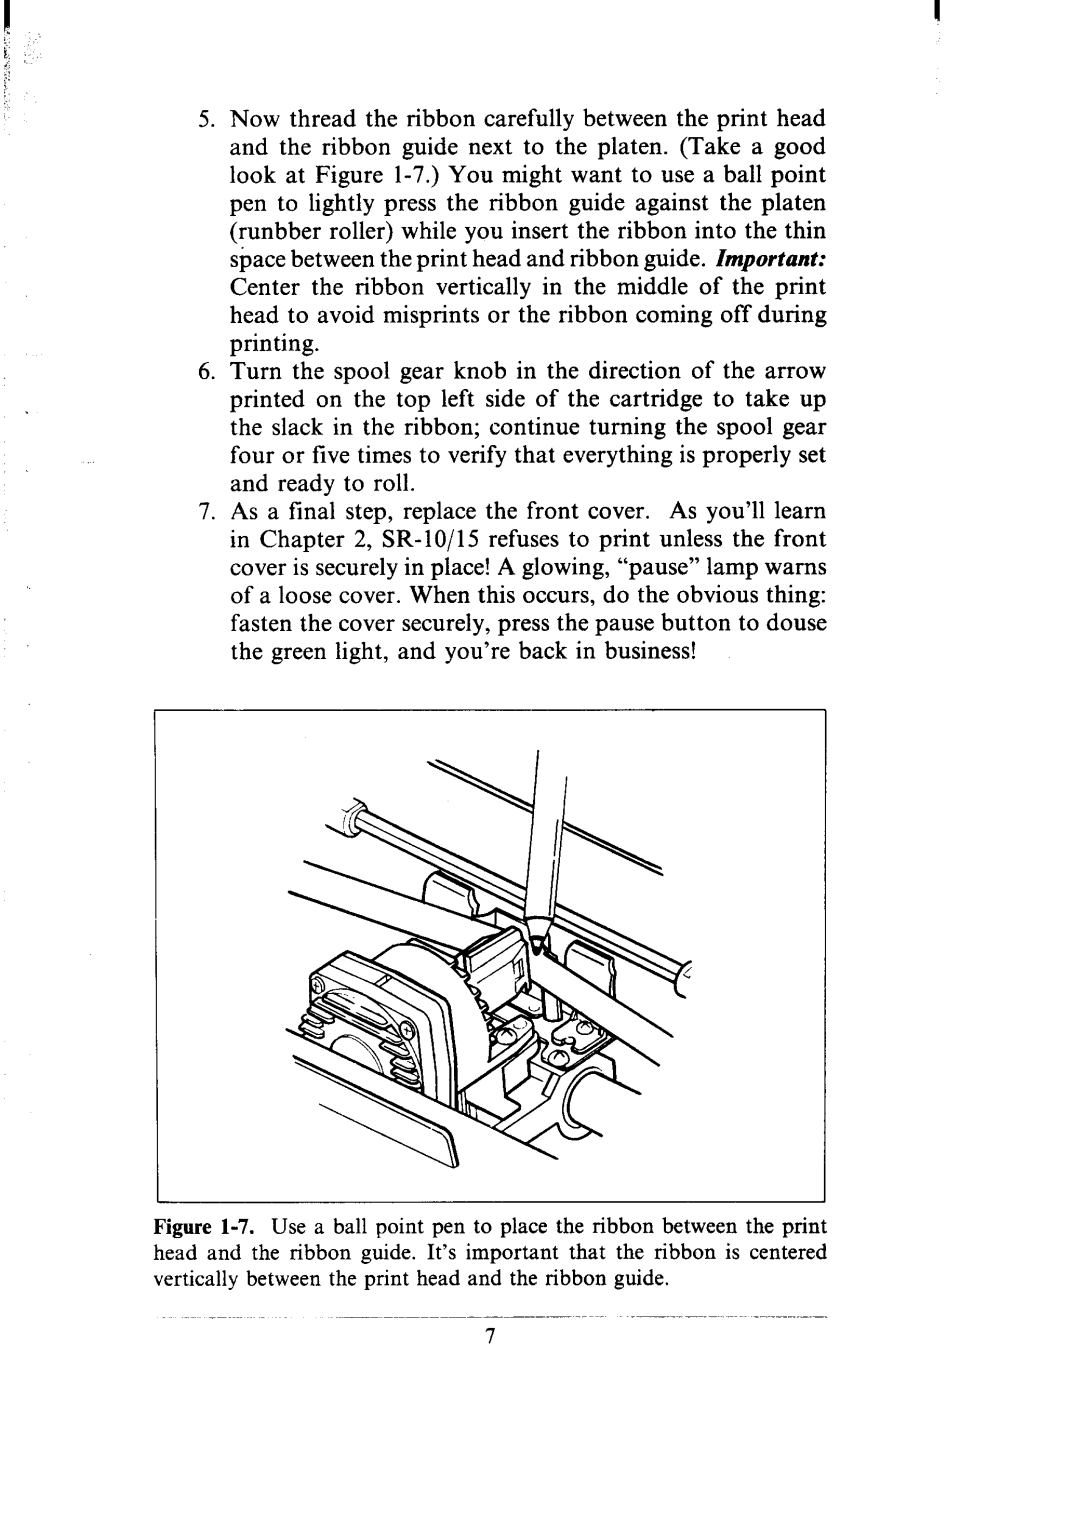 Star Micronics SR-10/I5 user manual 